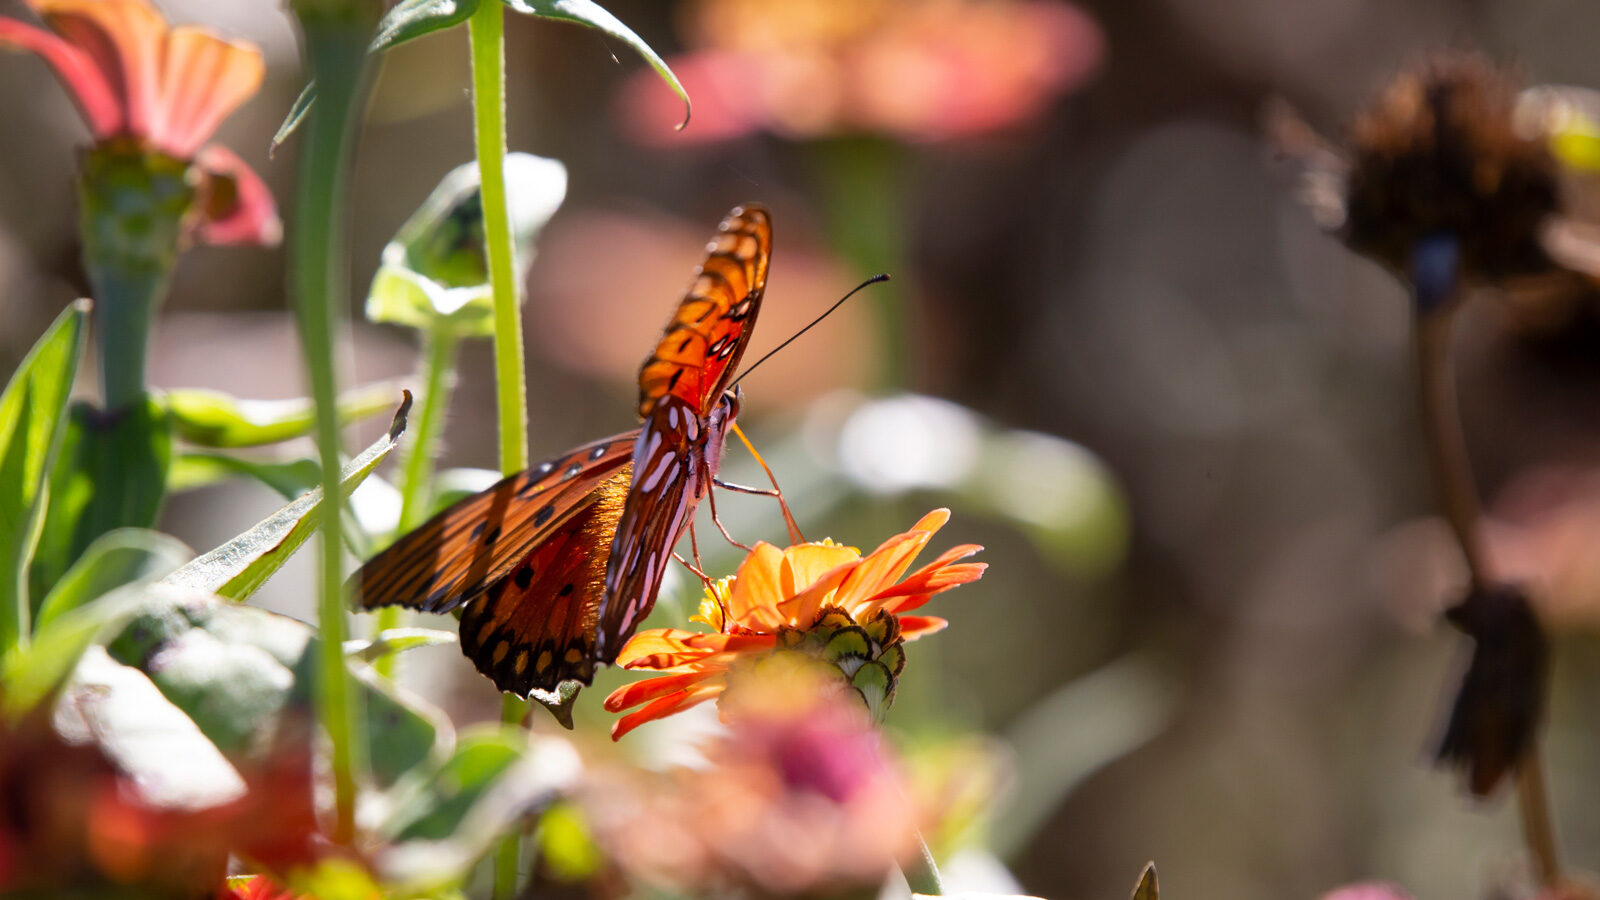 Gulf fritillary butterfly drinking nectar from an orange flower